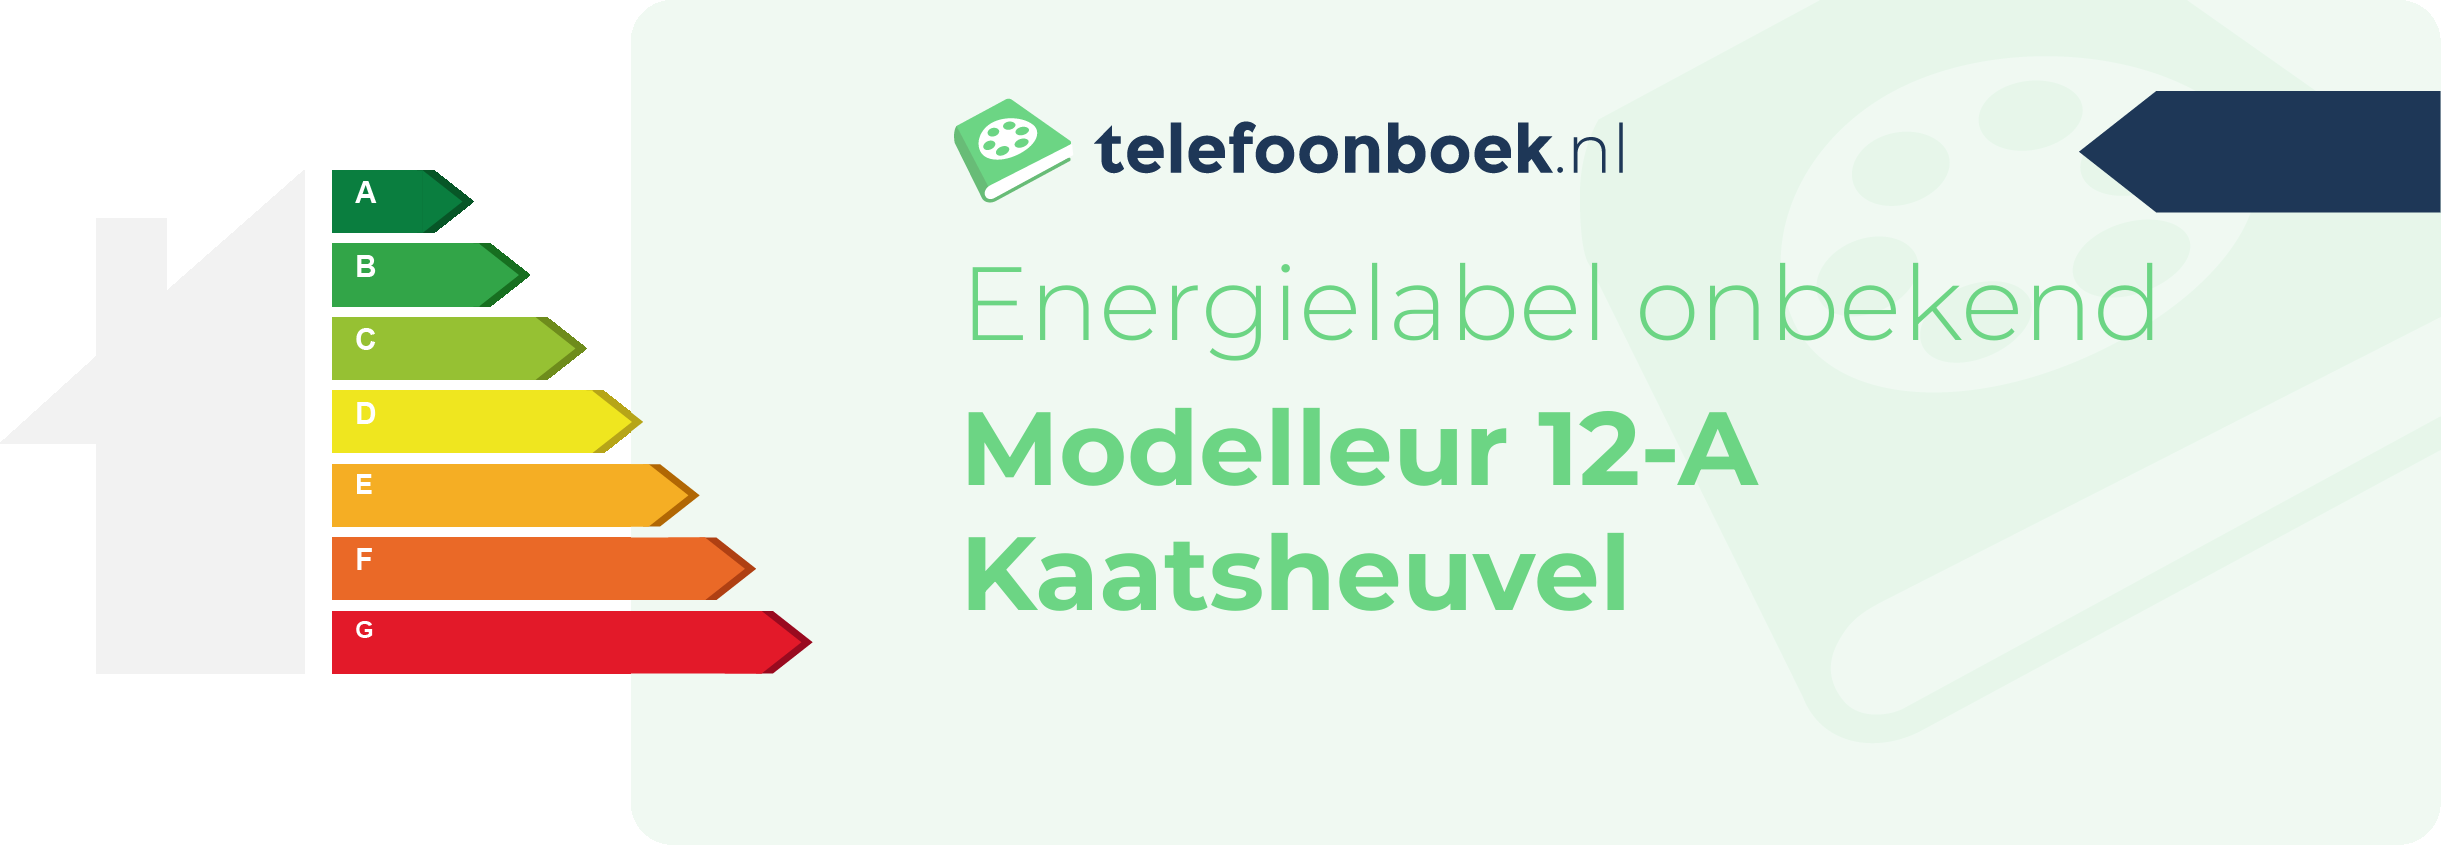 Energielabel Modelleur 12-A Kaatsheuvel